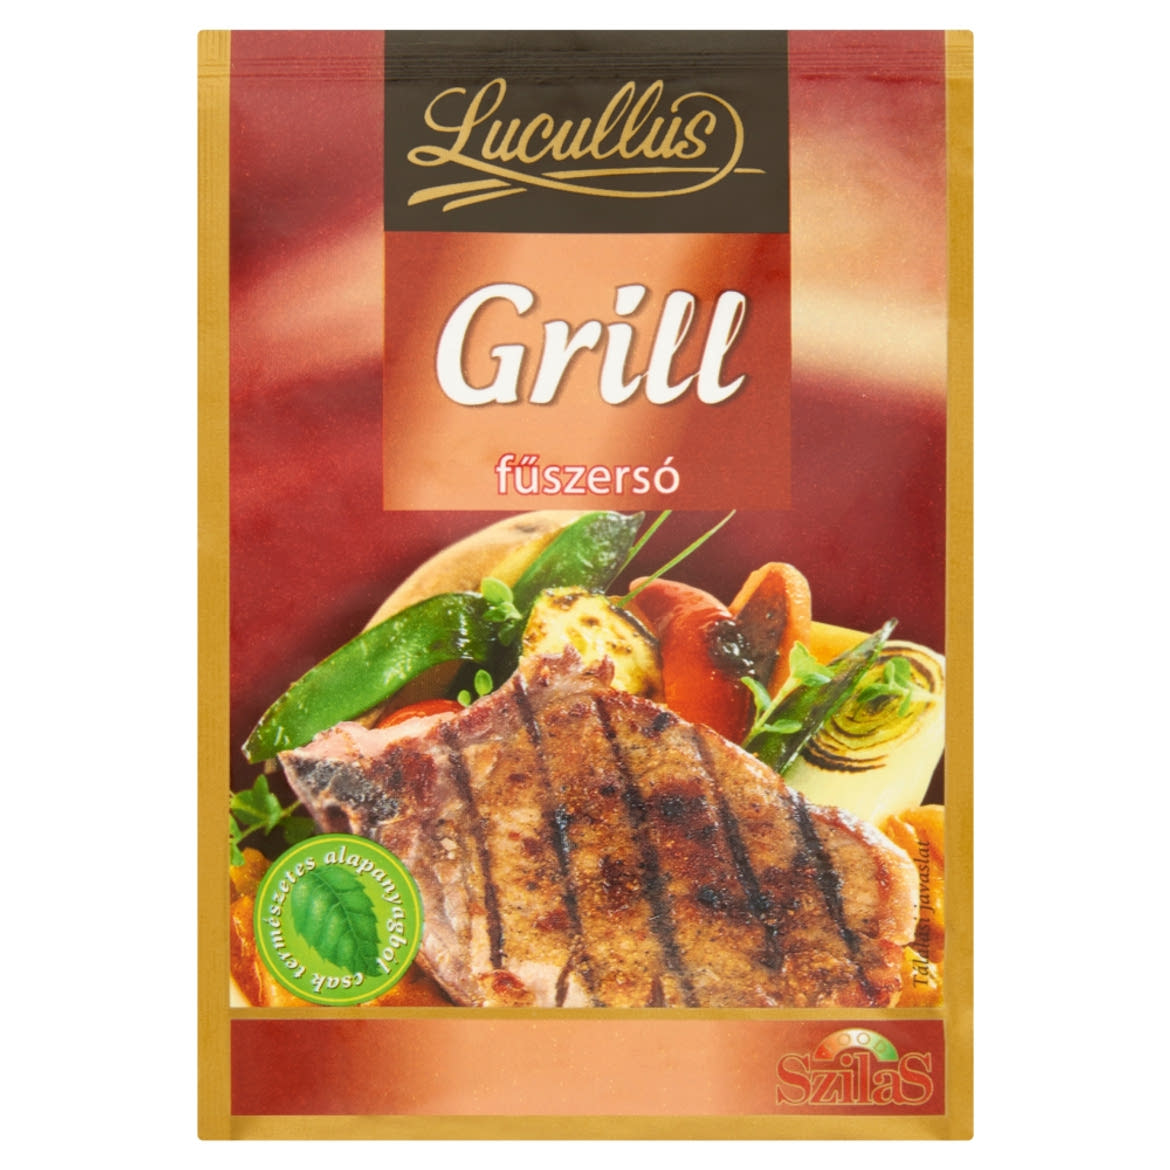 Lucullus grill fűszersó